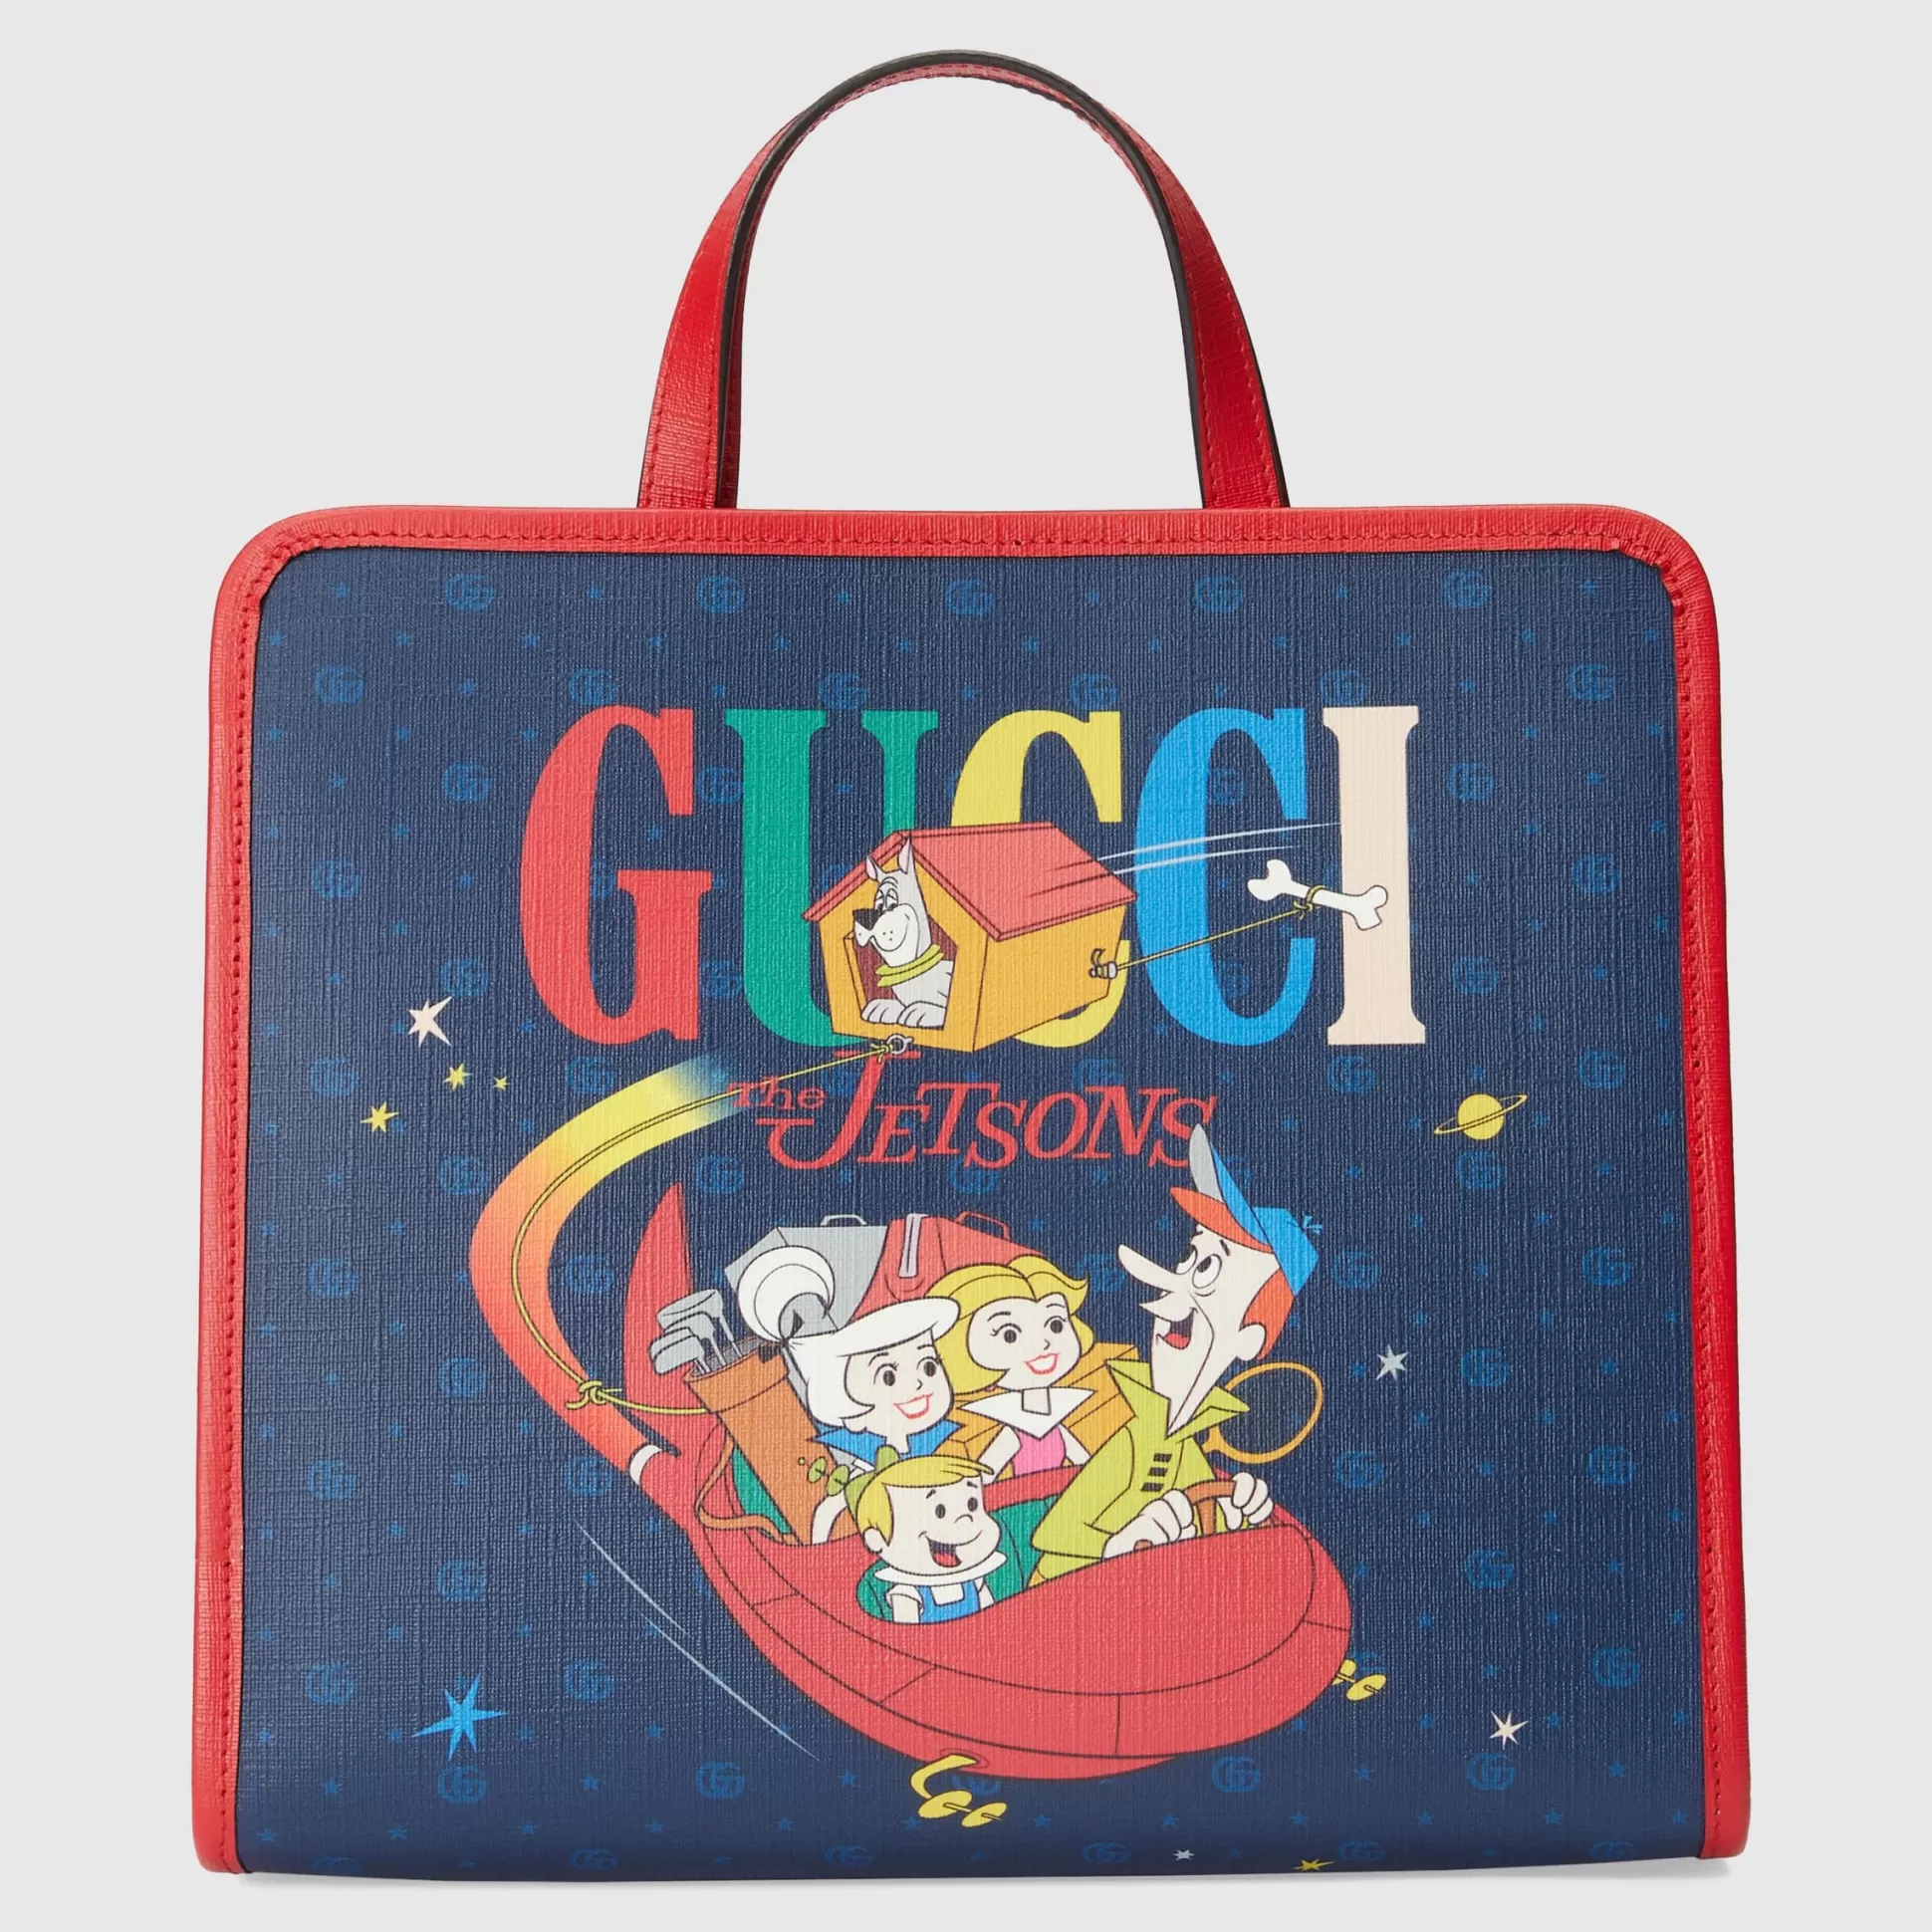 GUCCI Children'S Printed Tote Bag-Children Bags & Backpacks